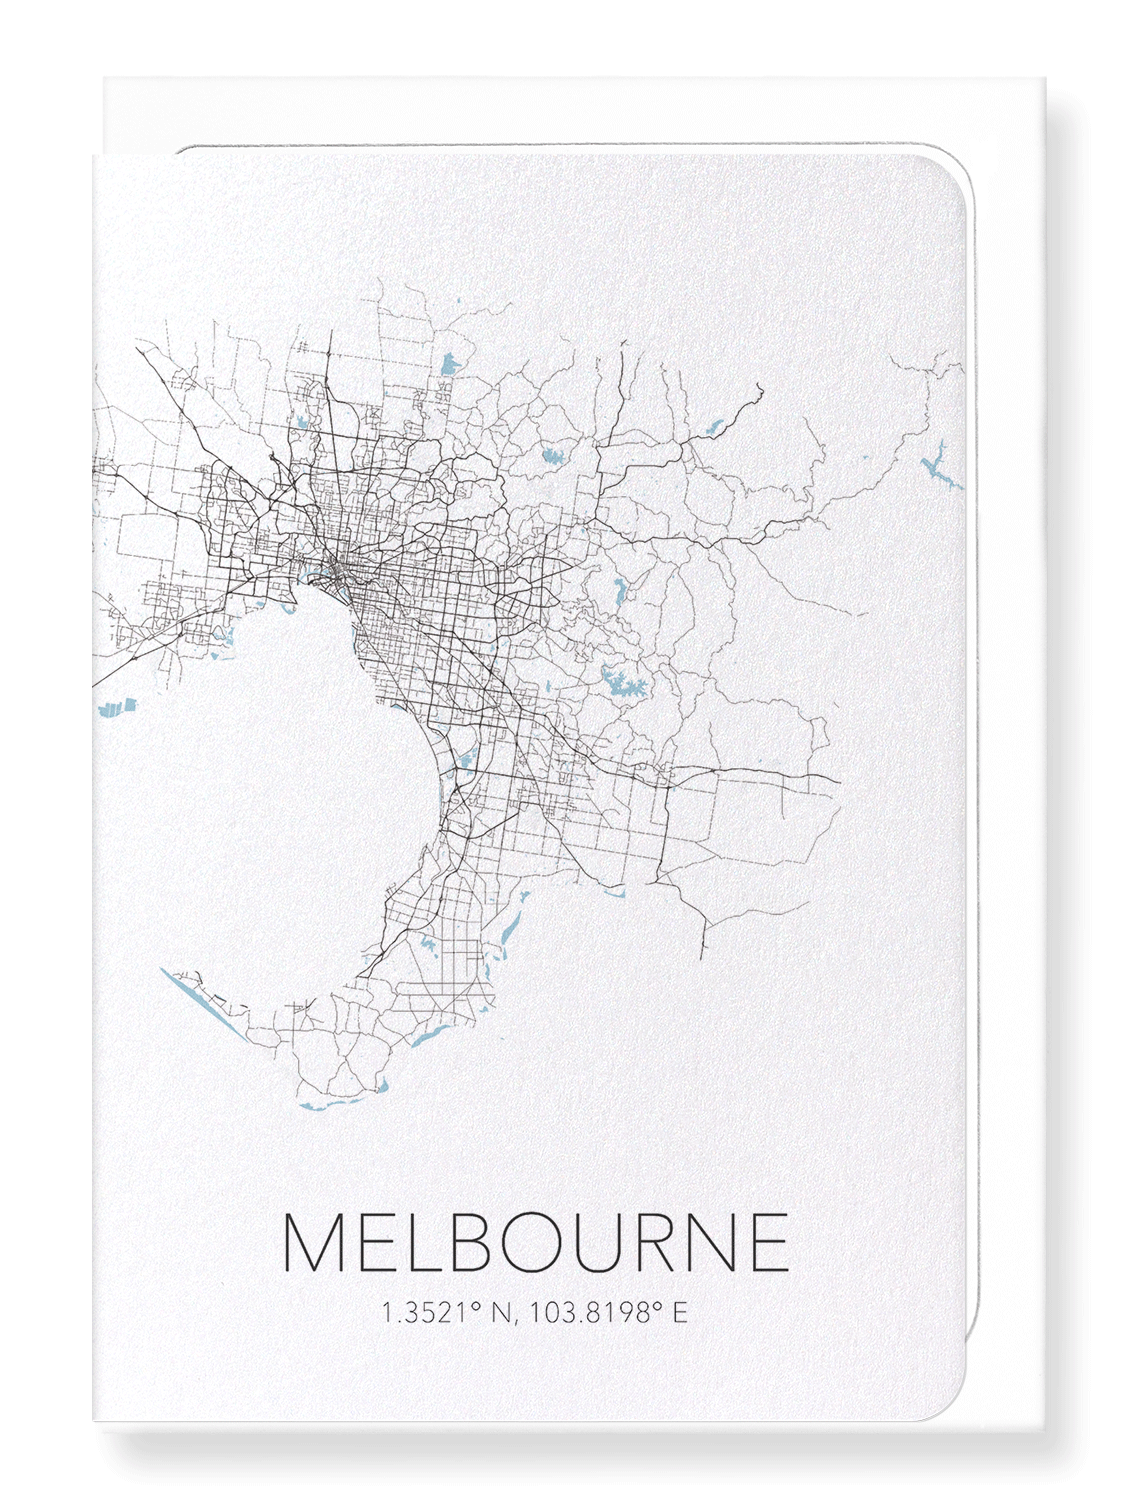 MELBOURNE CUTOUT: Map Cutout Greeting Card